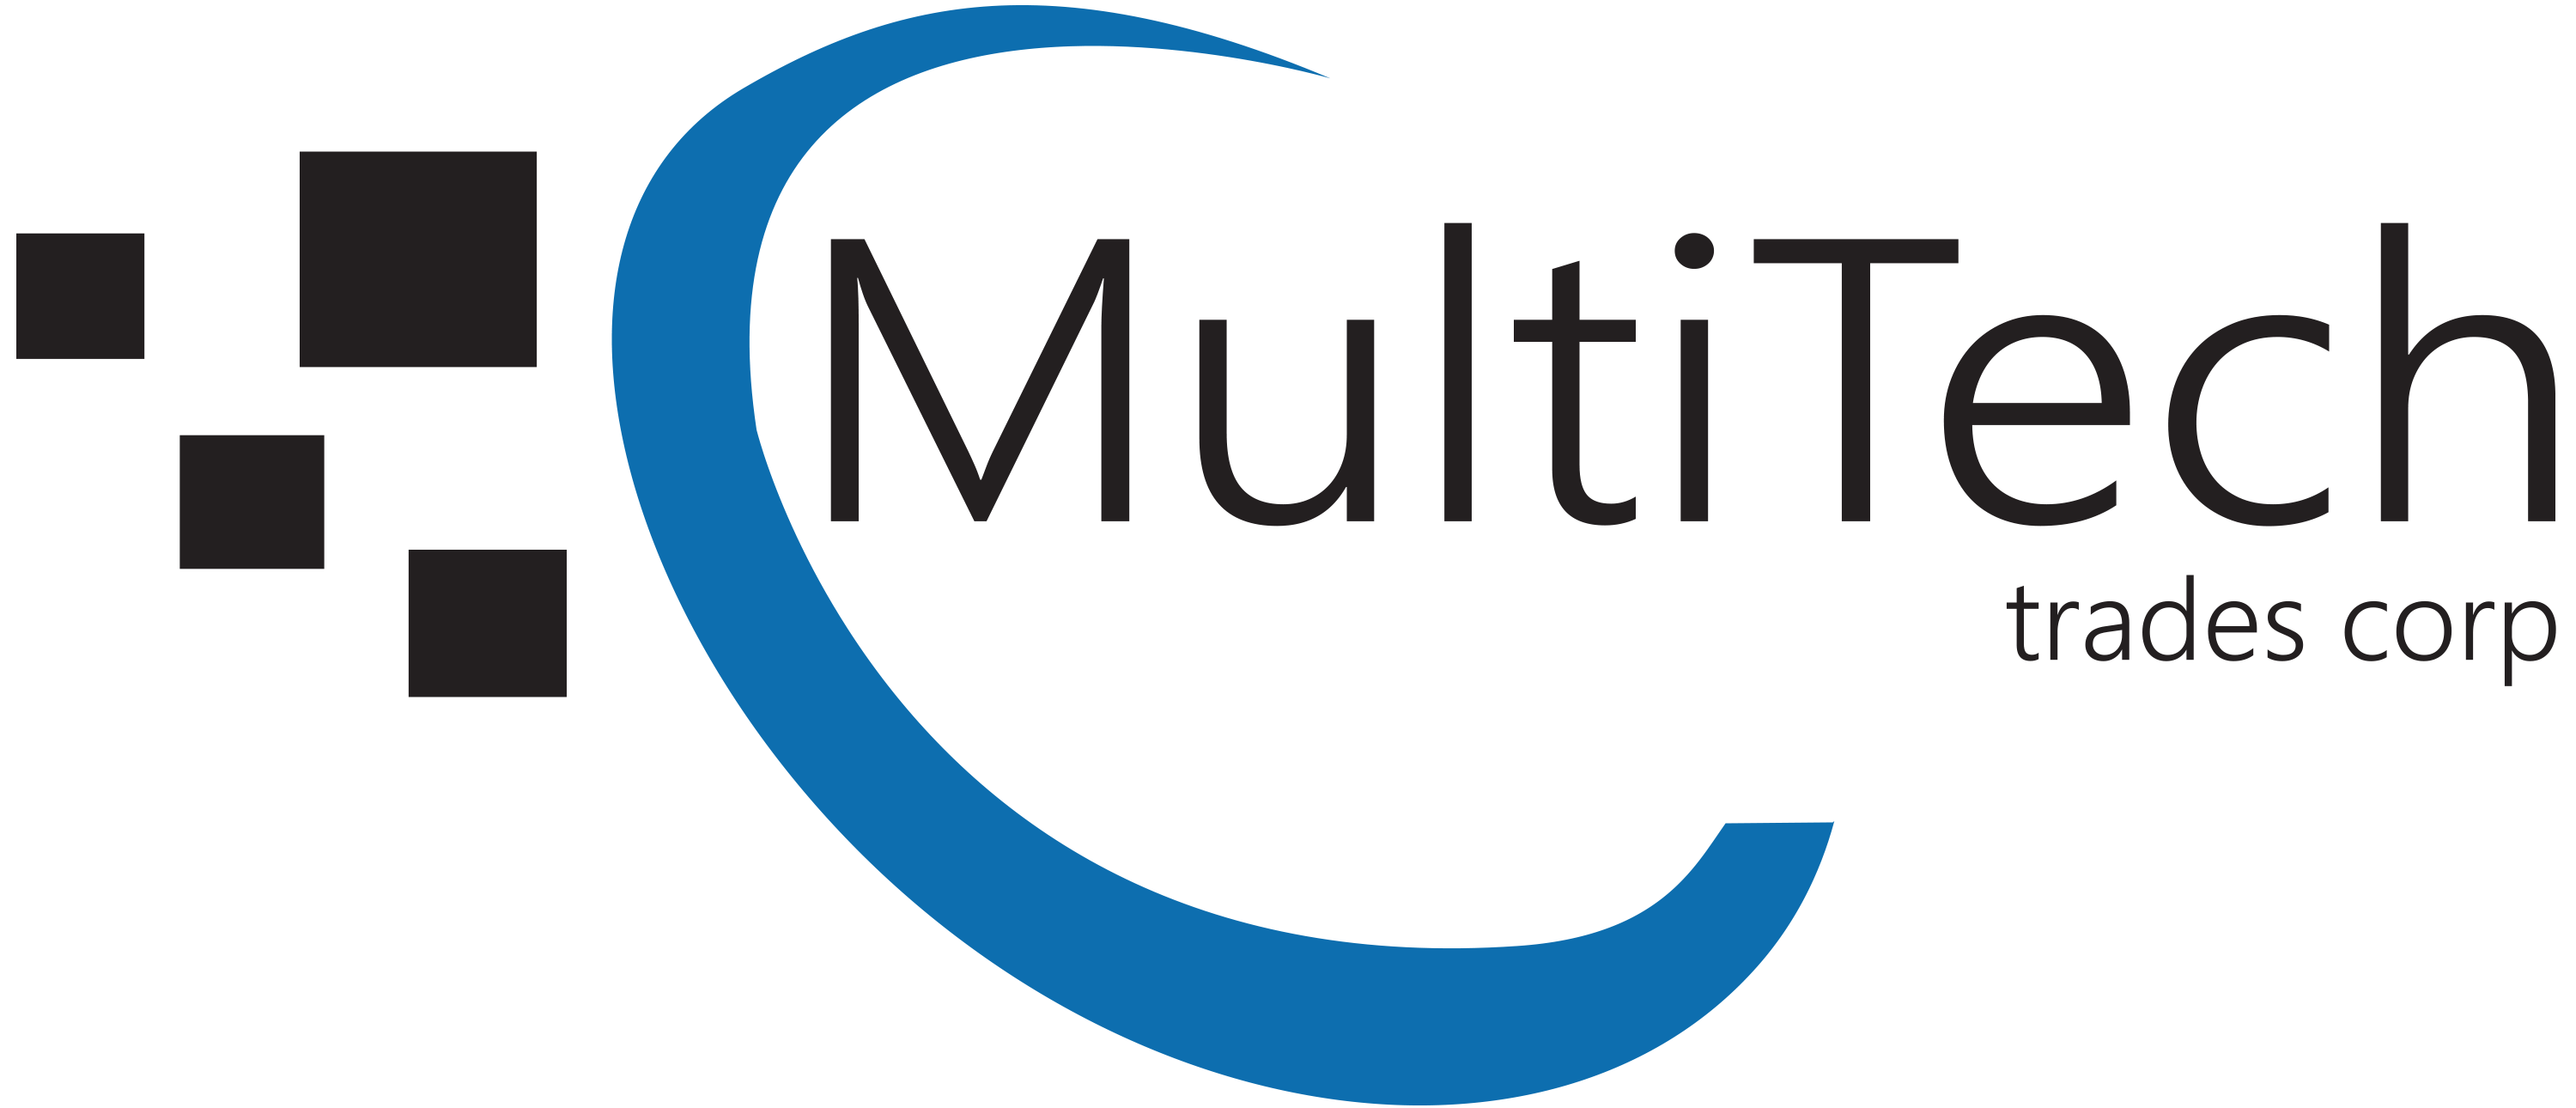 MultiTech Trades Corp, Ltd.